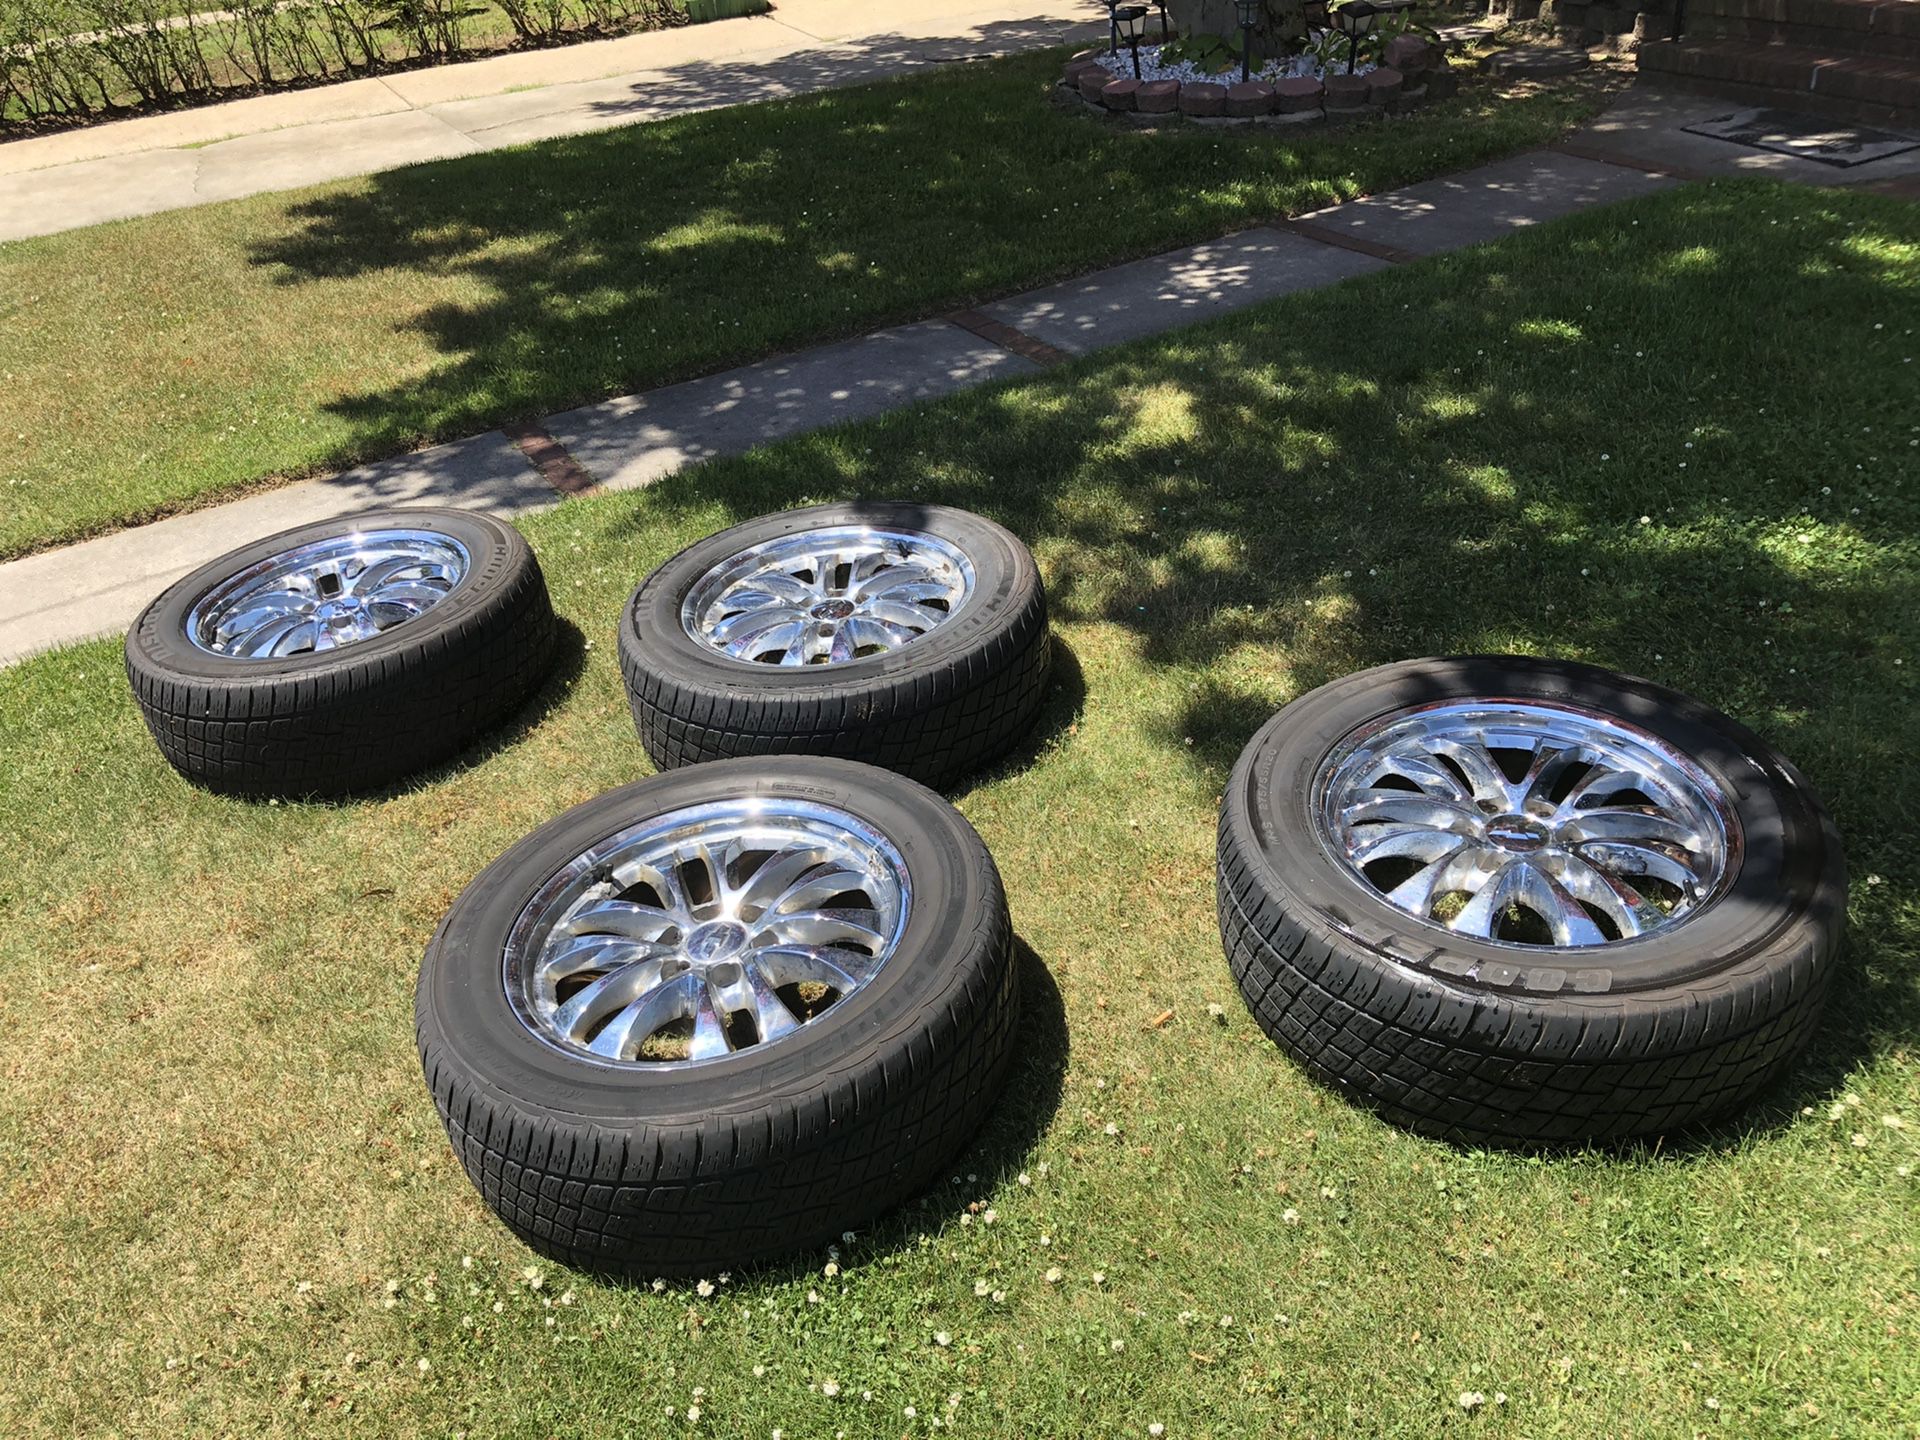 Chevy chrome 6 lug rims and tires